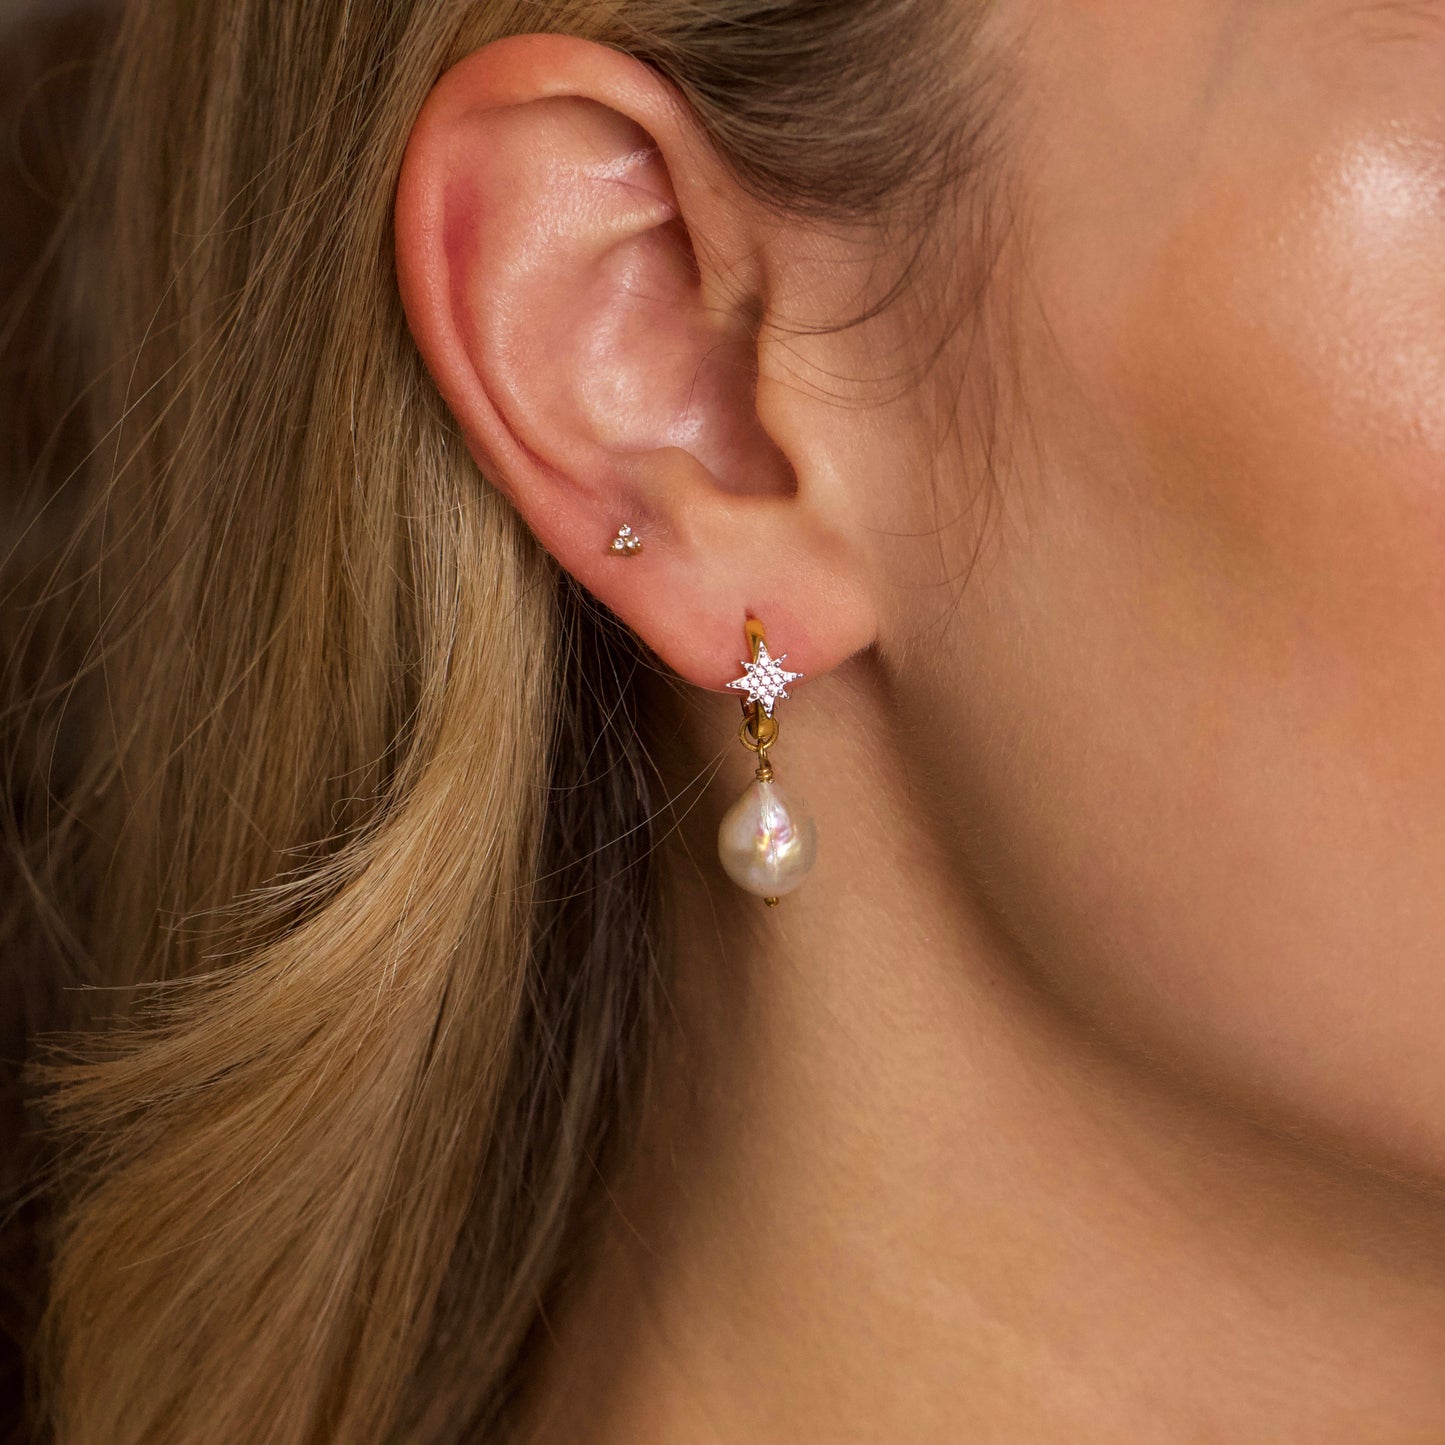 Beautiful Gold Vermeil earrings crafted by Carrie Elizabeth Jewellery 